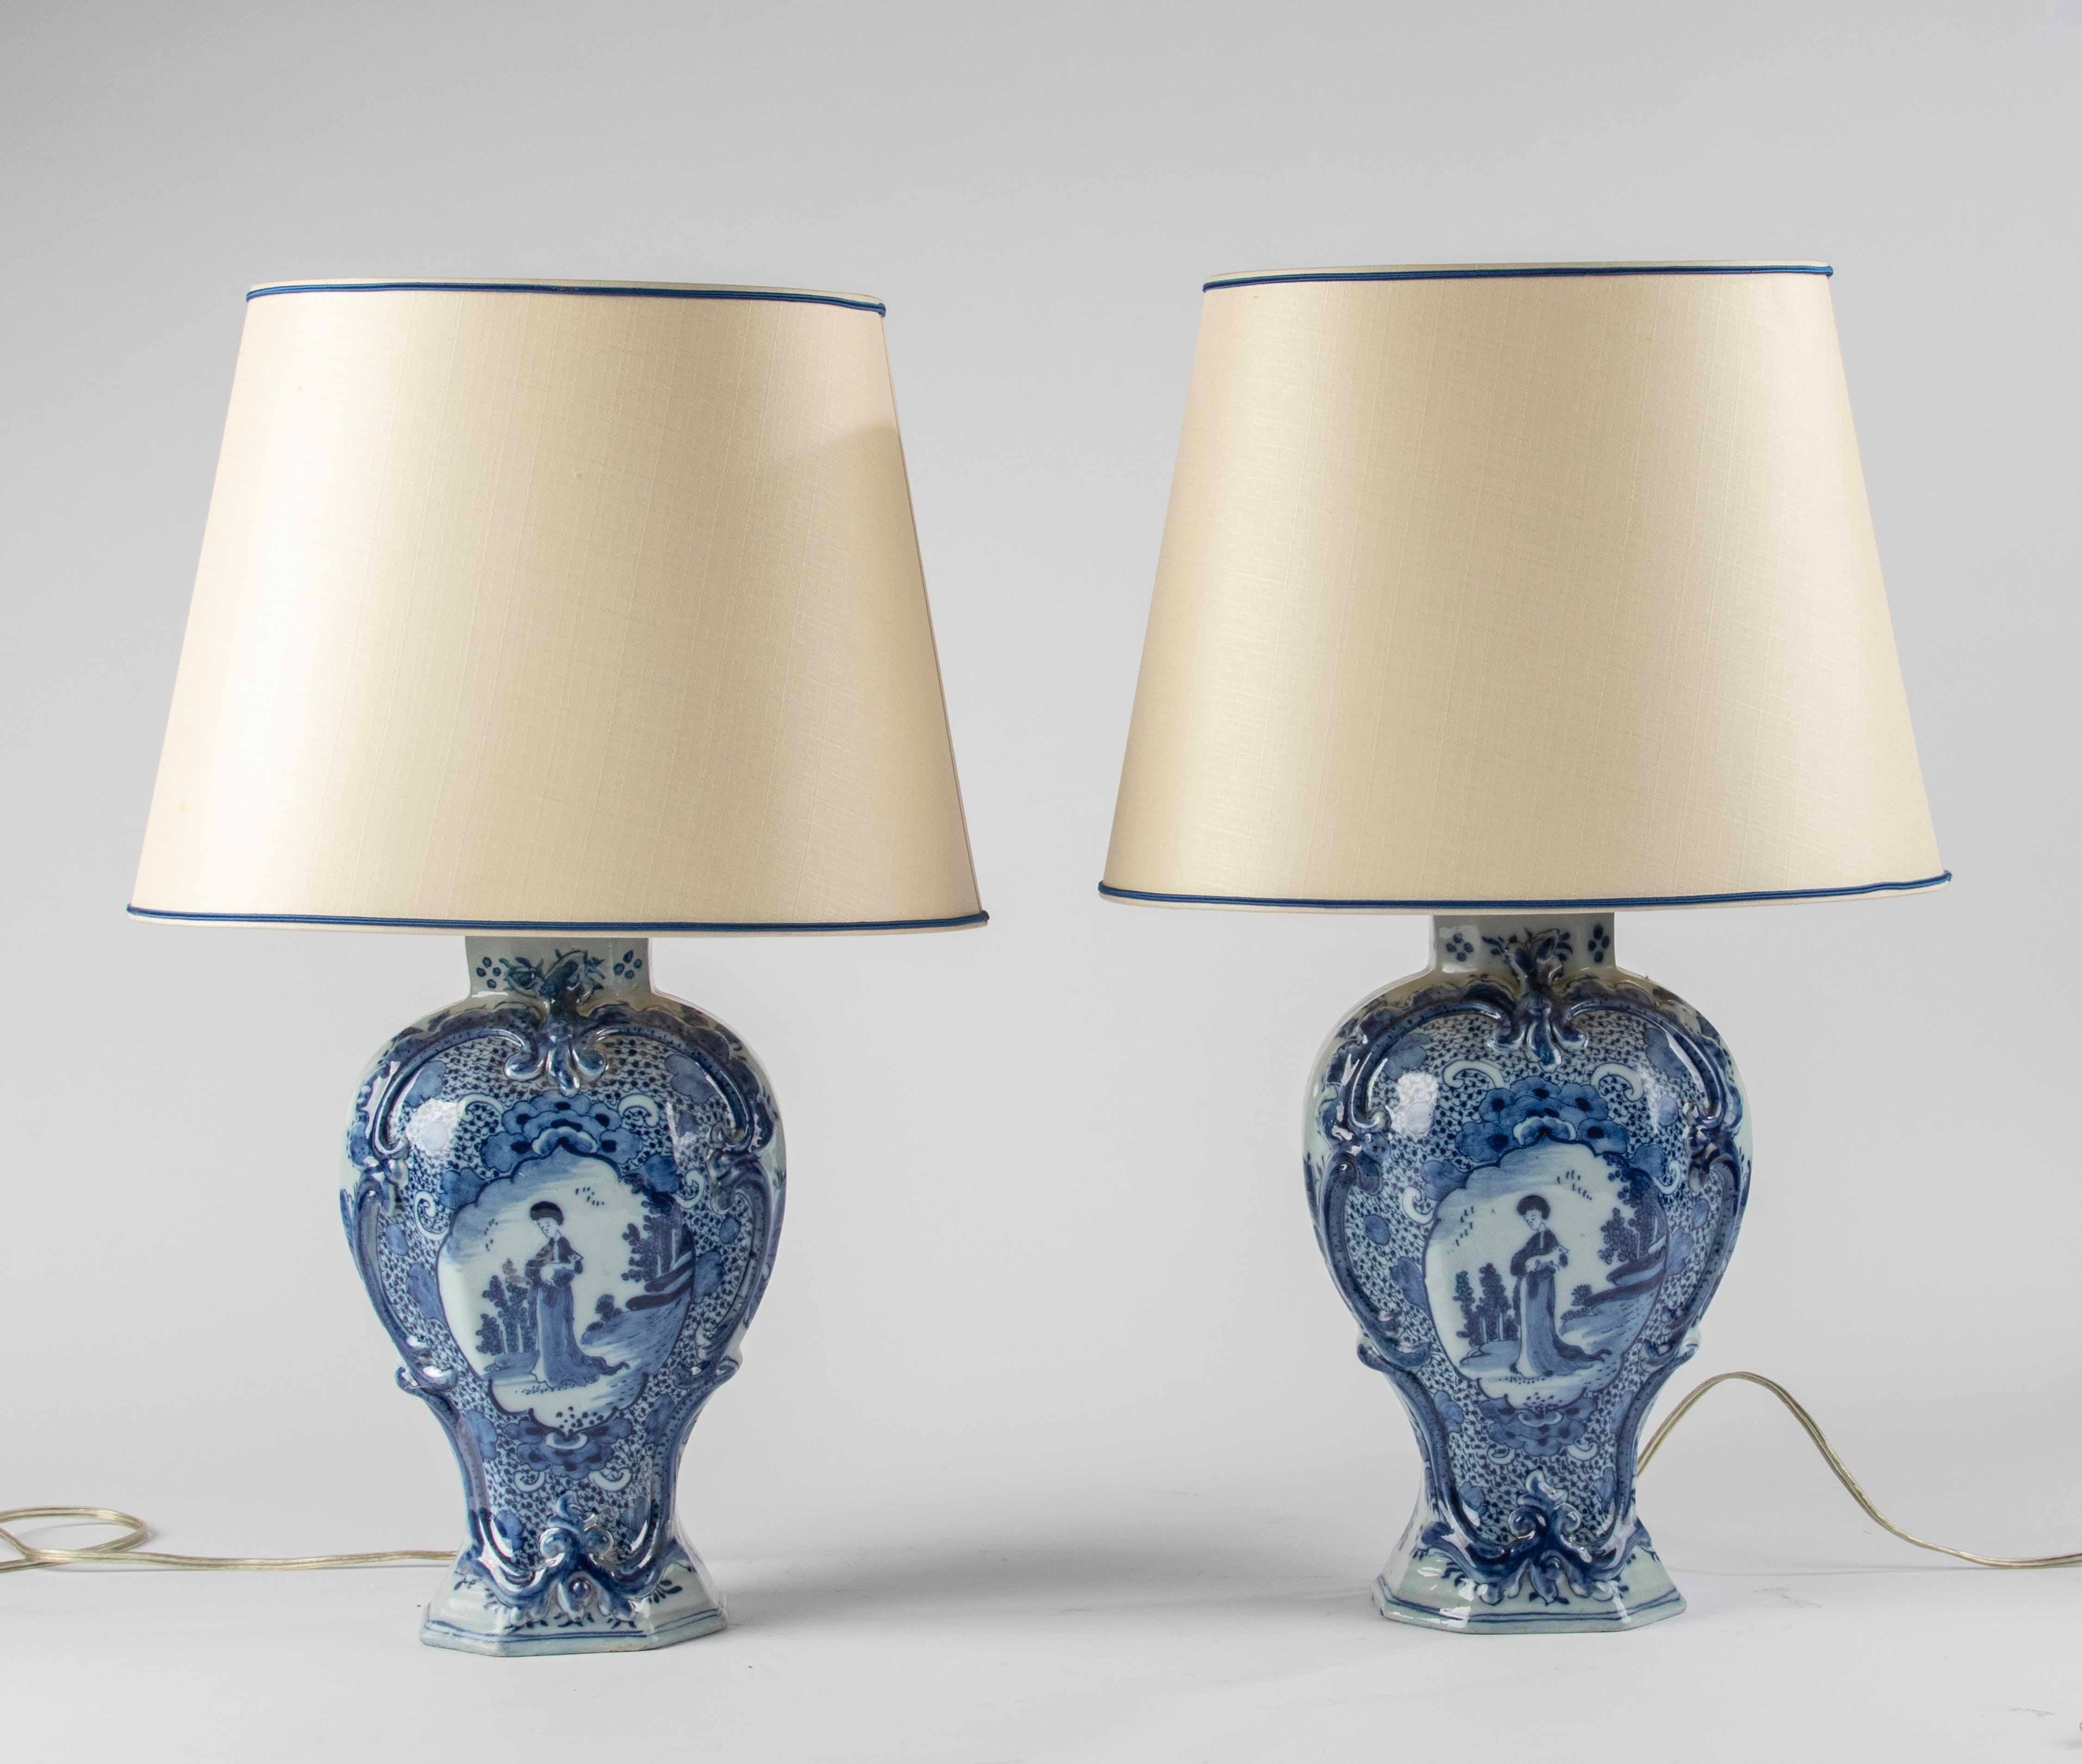 A Pair of Late 18th Century Delft Ceramic Table Lamps - De Klaauw Pottery  For Sale 3